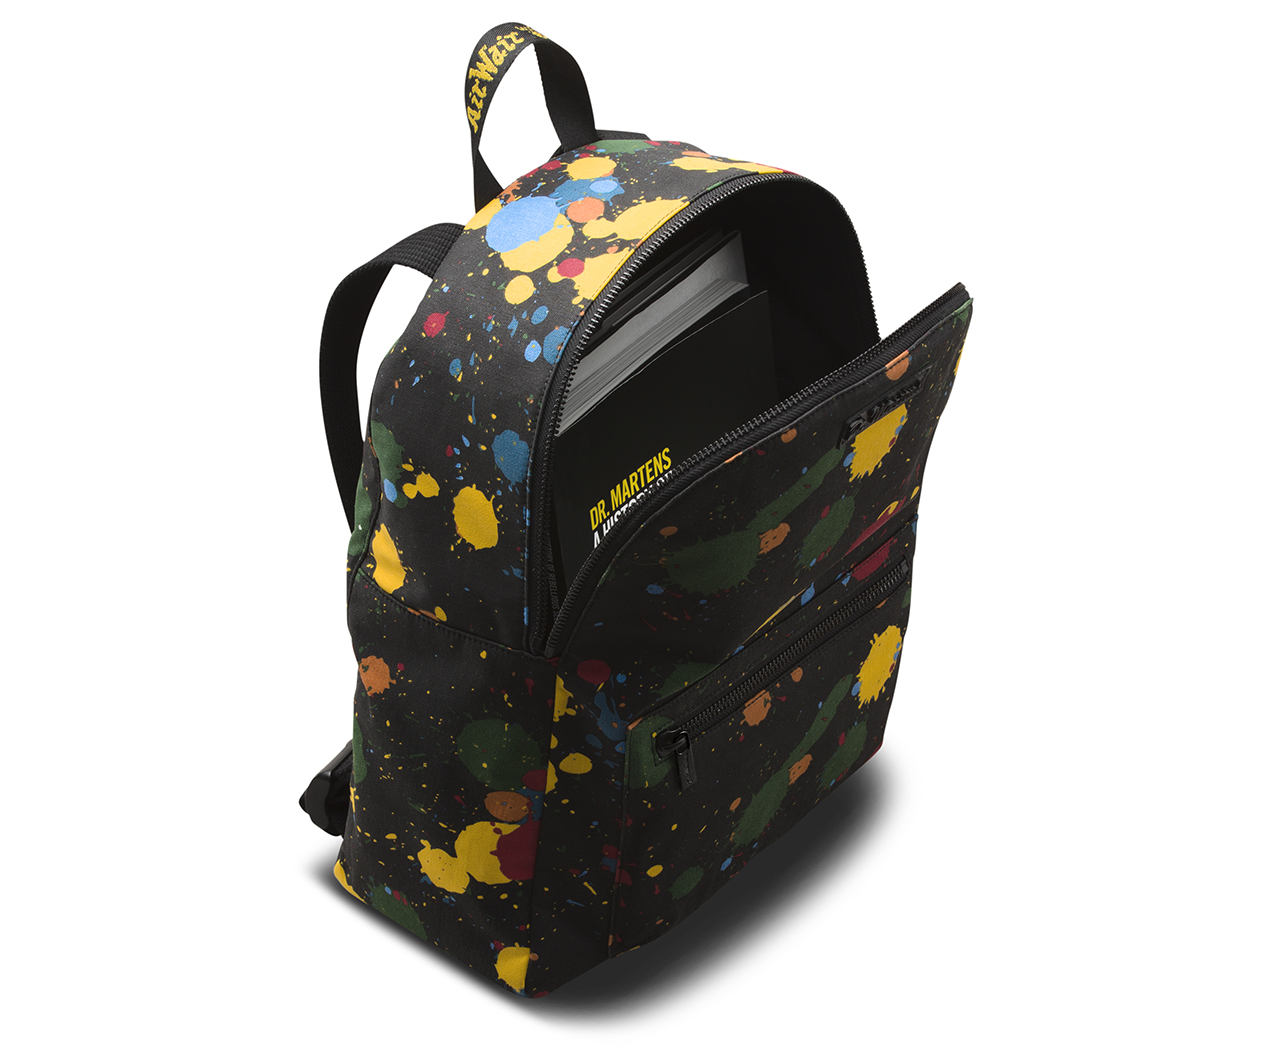 BackpackFabric backpackCanvas backpack